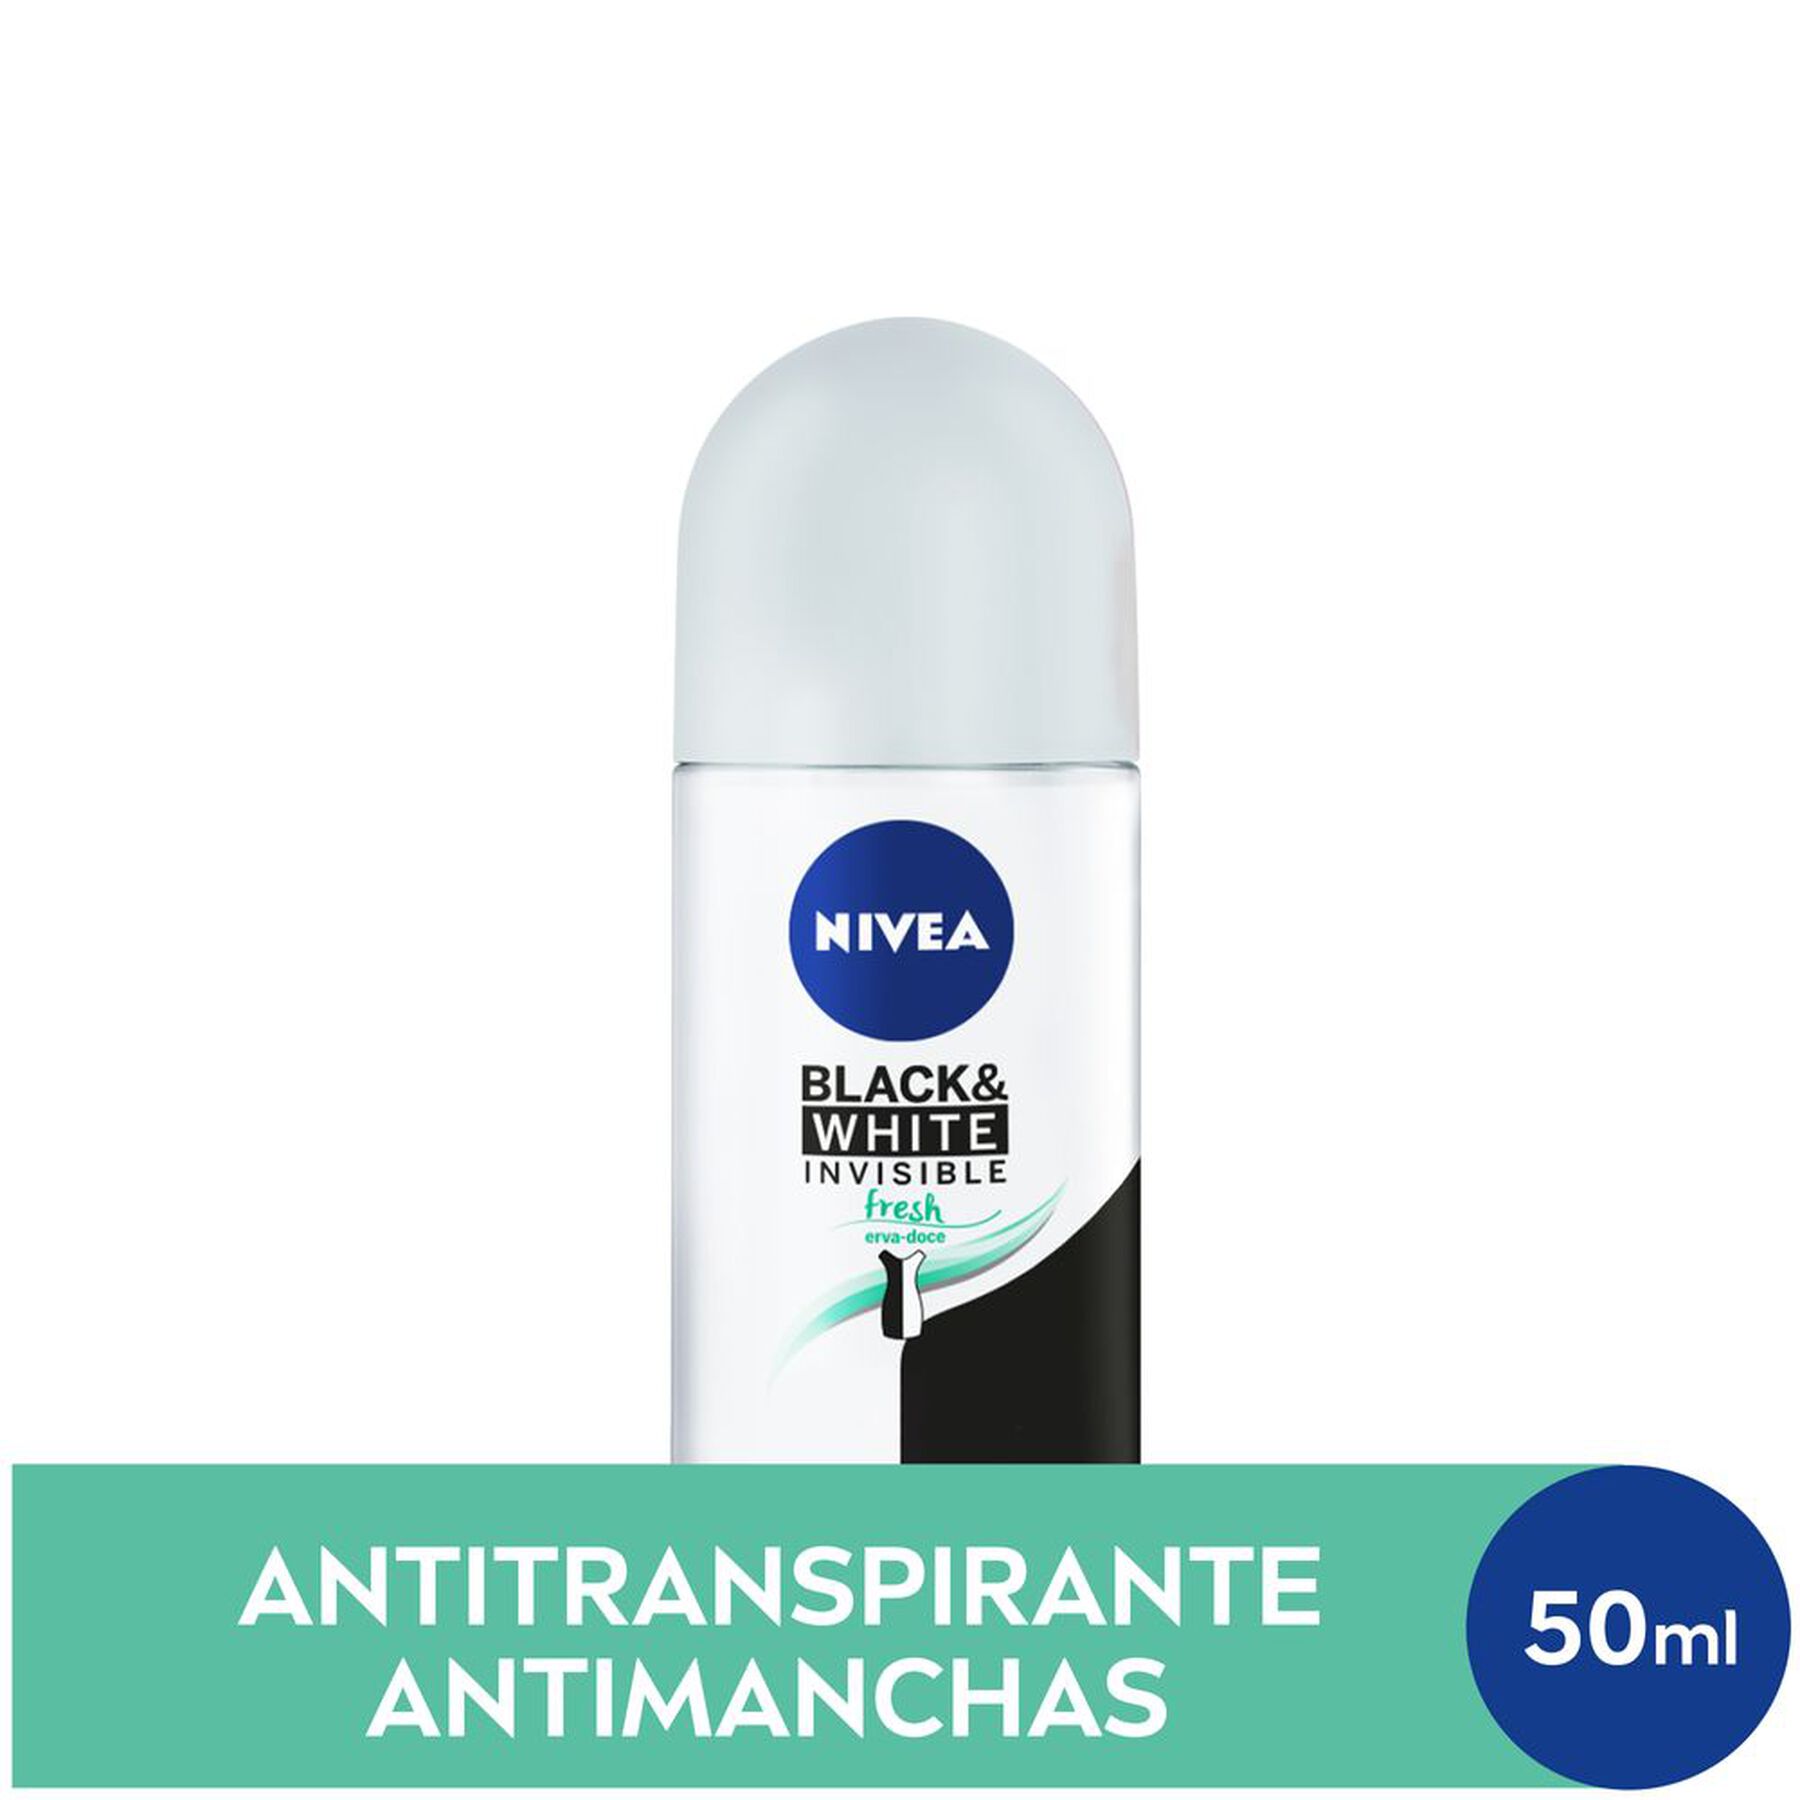 Antitranspirante Roll-On Erva-Doce Nivea Invisible for Black & White Fresh 50ml